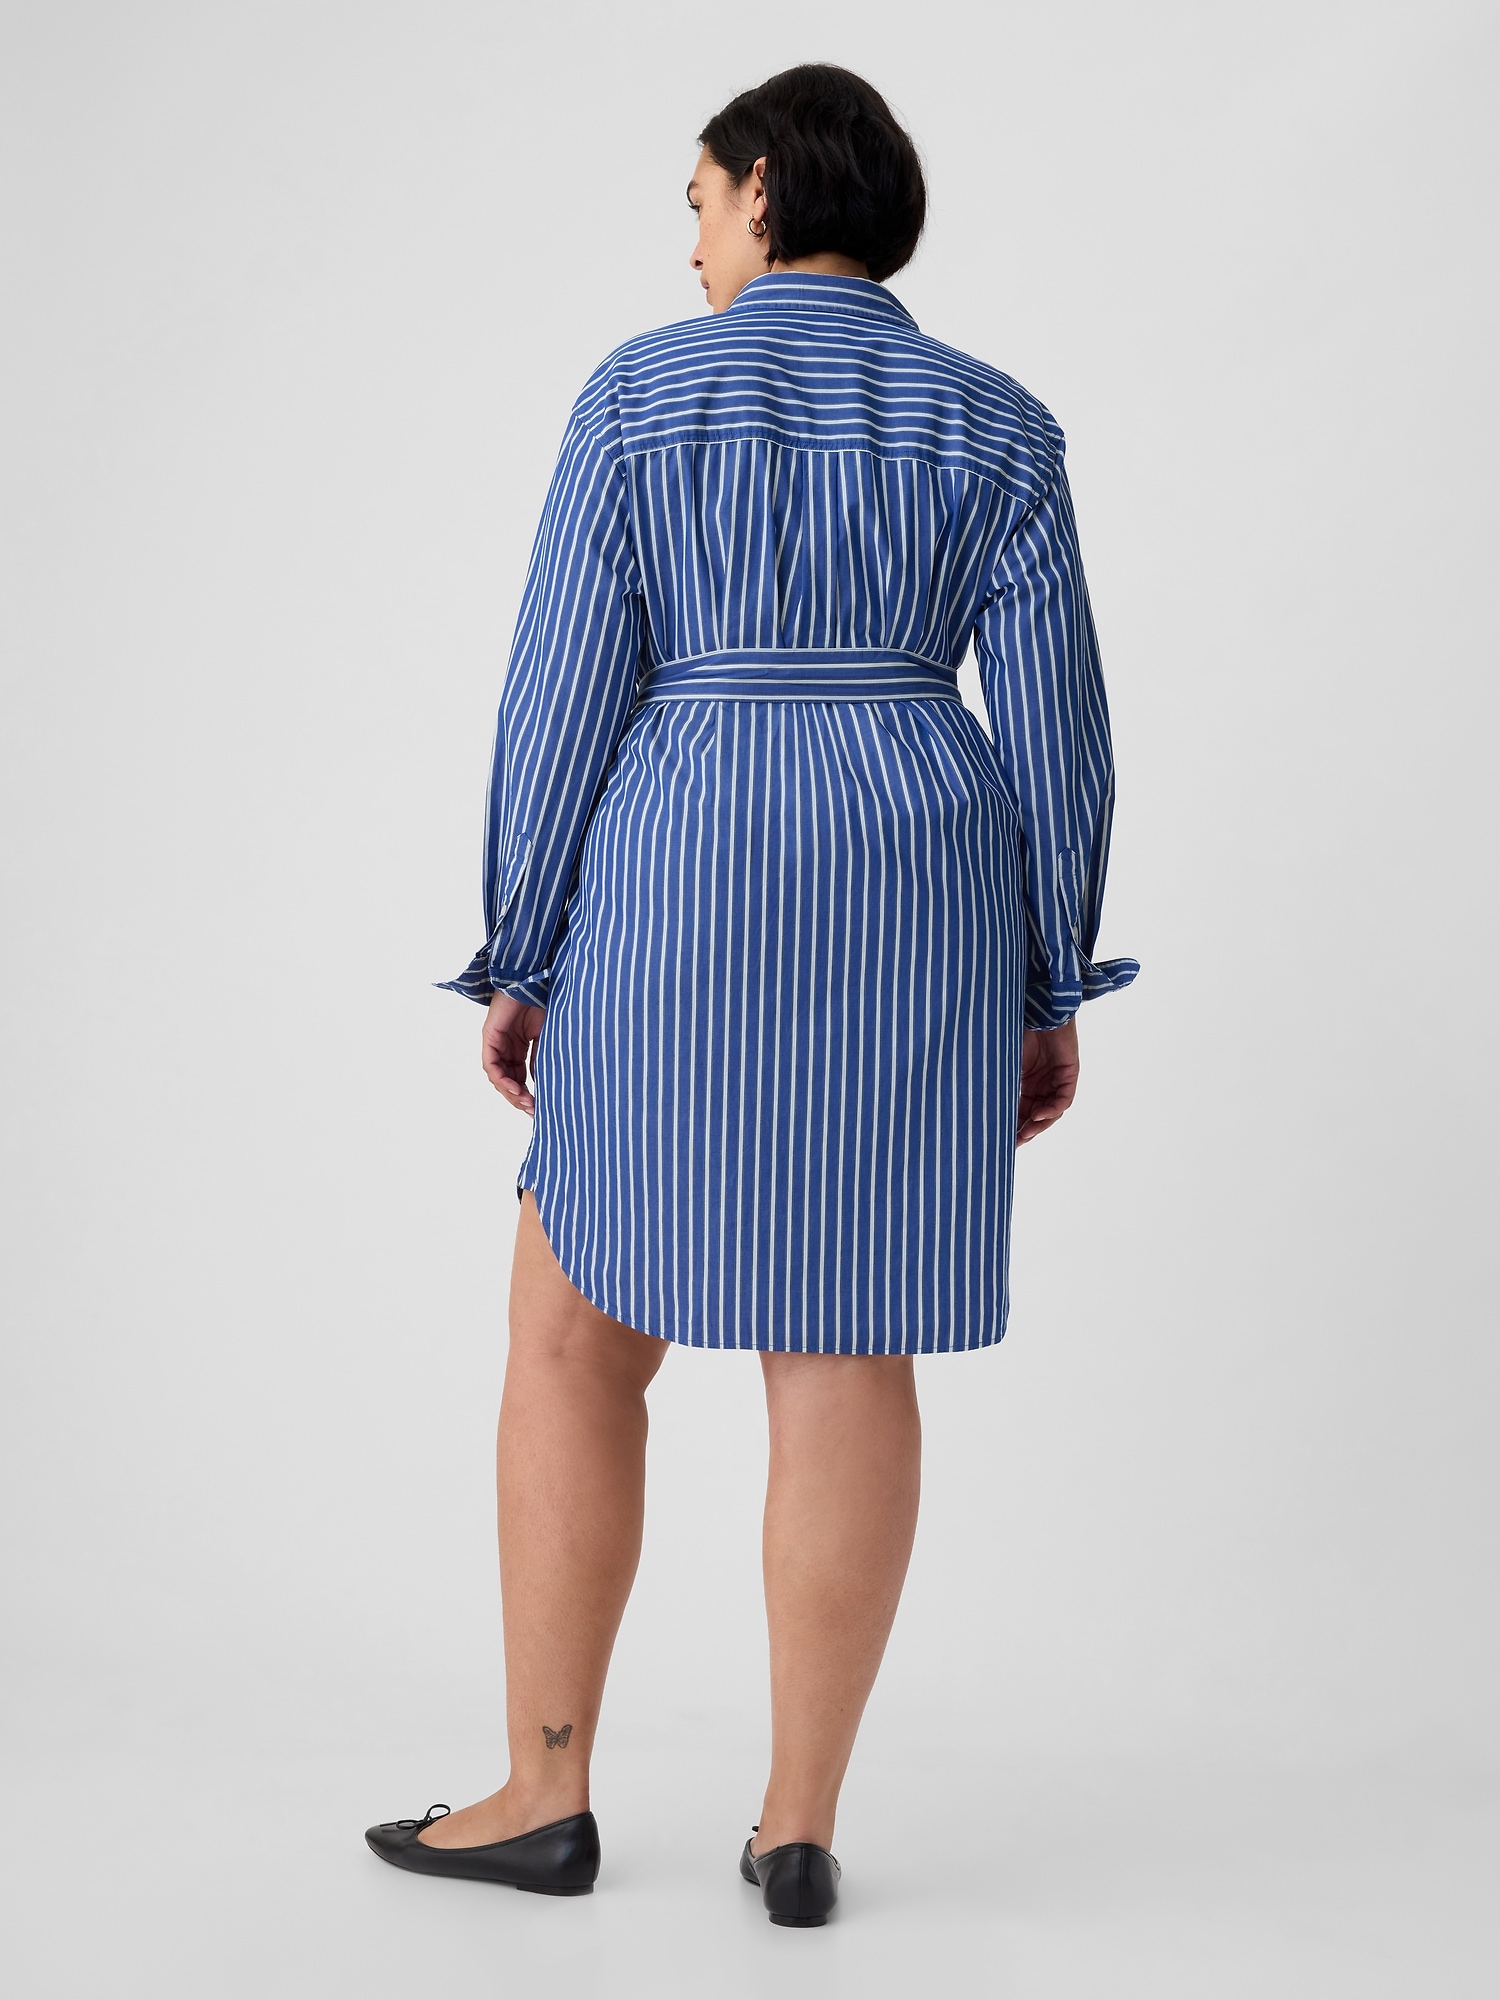 Habitat Shirt Dress 100% Linen Striped Sleeveless Multicolor Button Front M